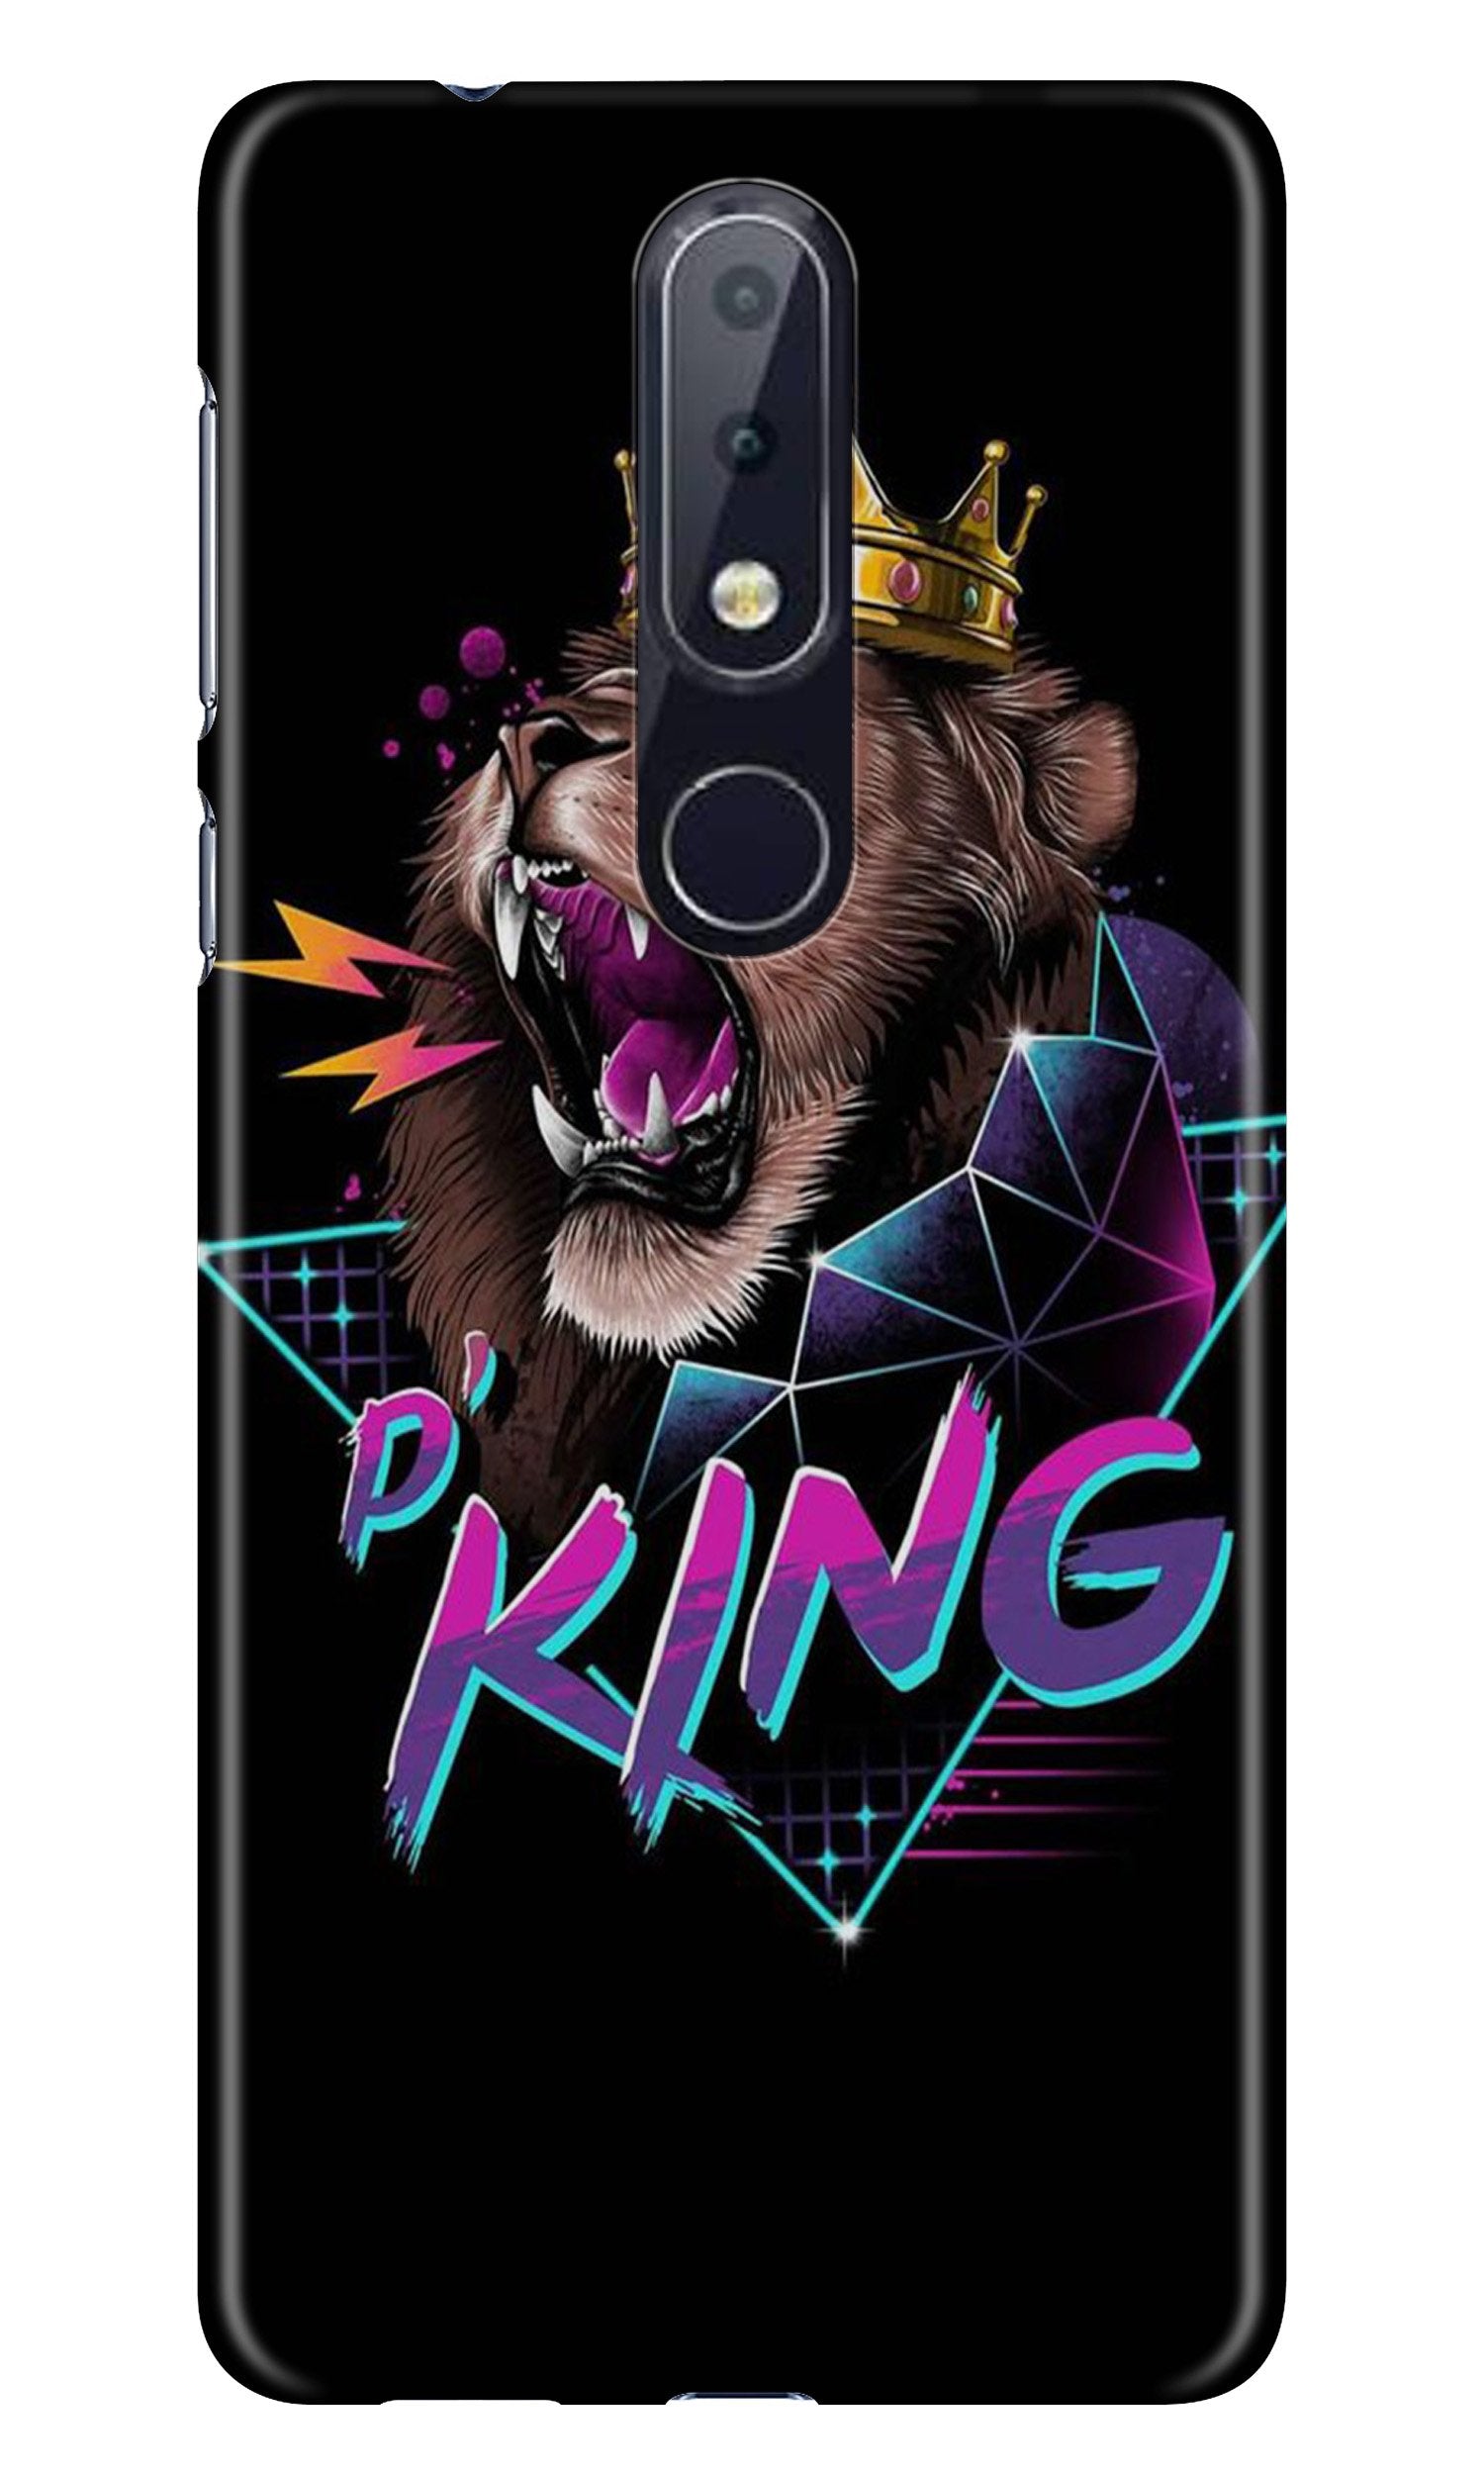 Lion King Case for Nokia 4.2 (Design No. 219)